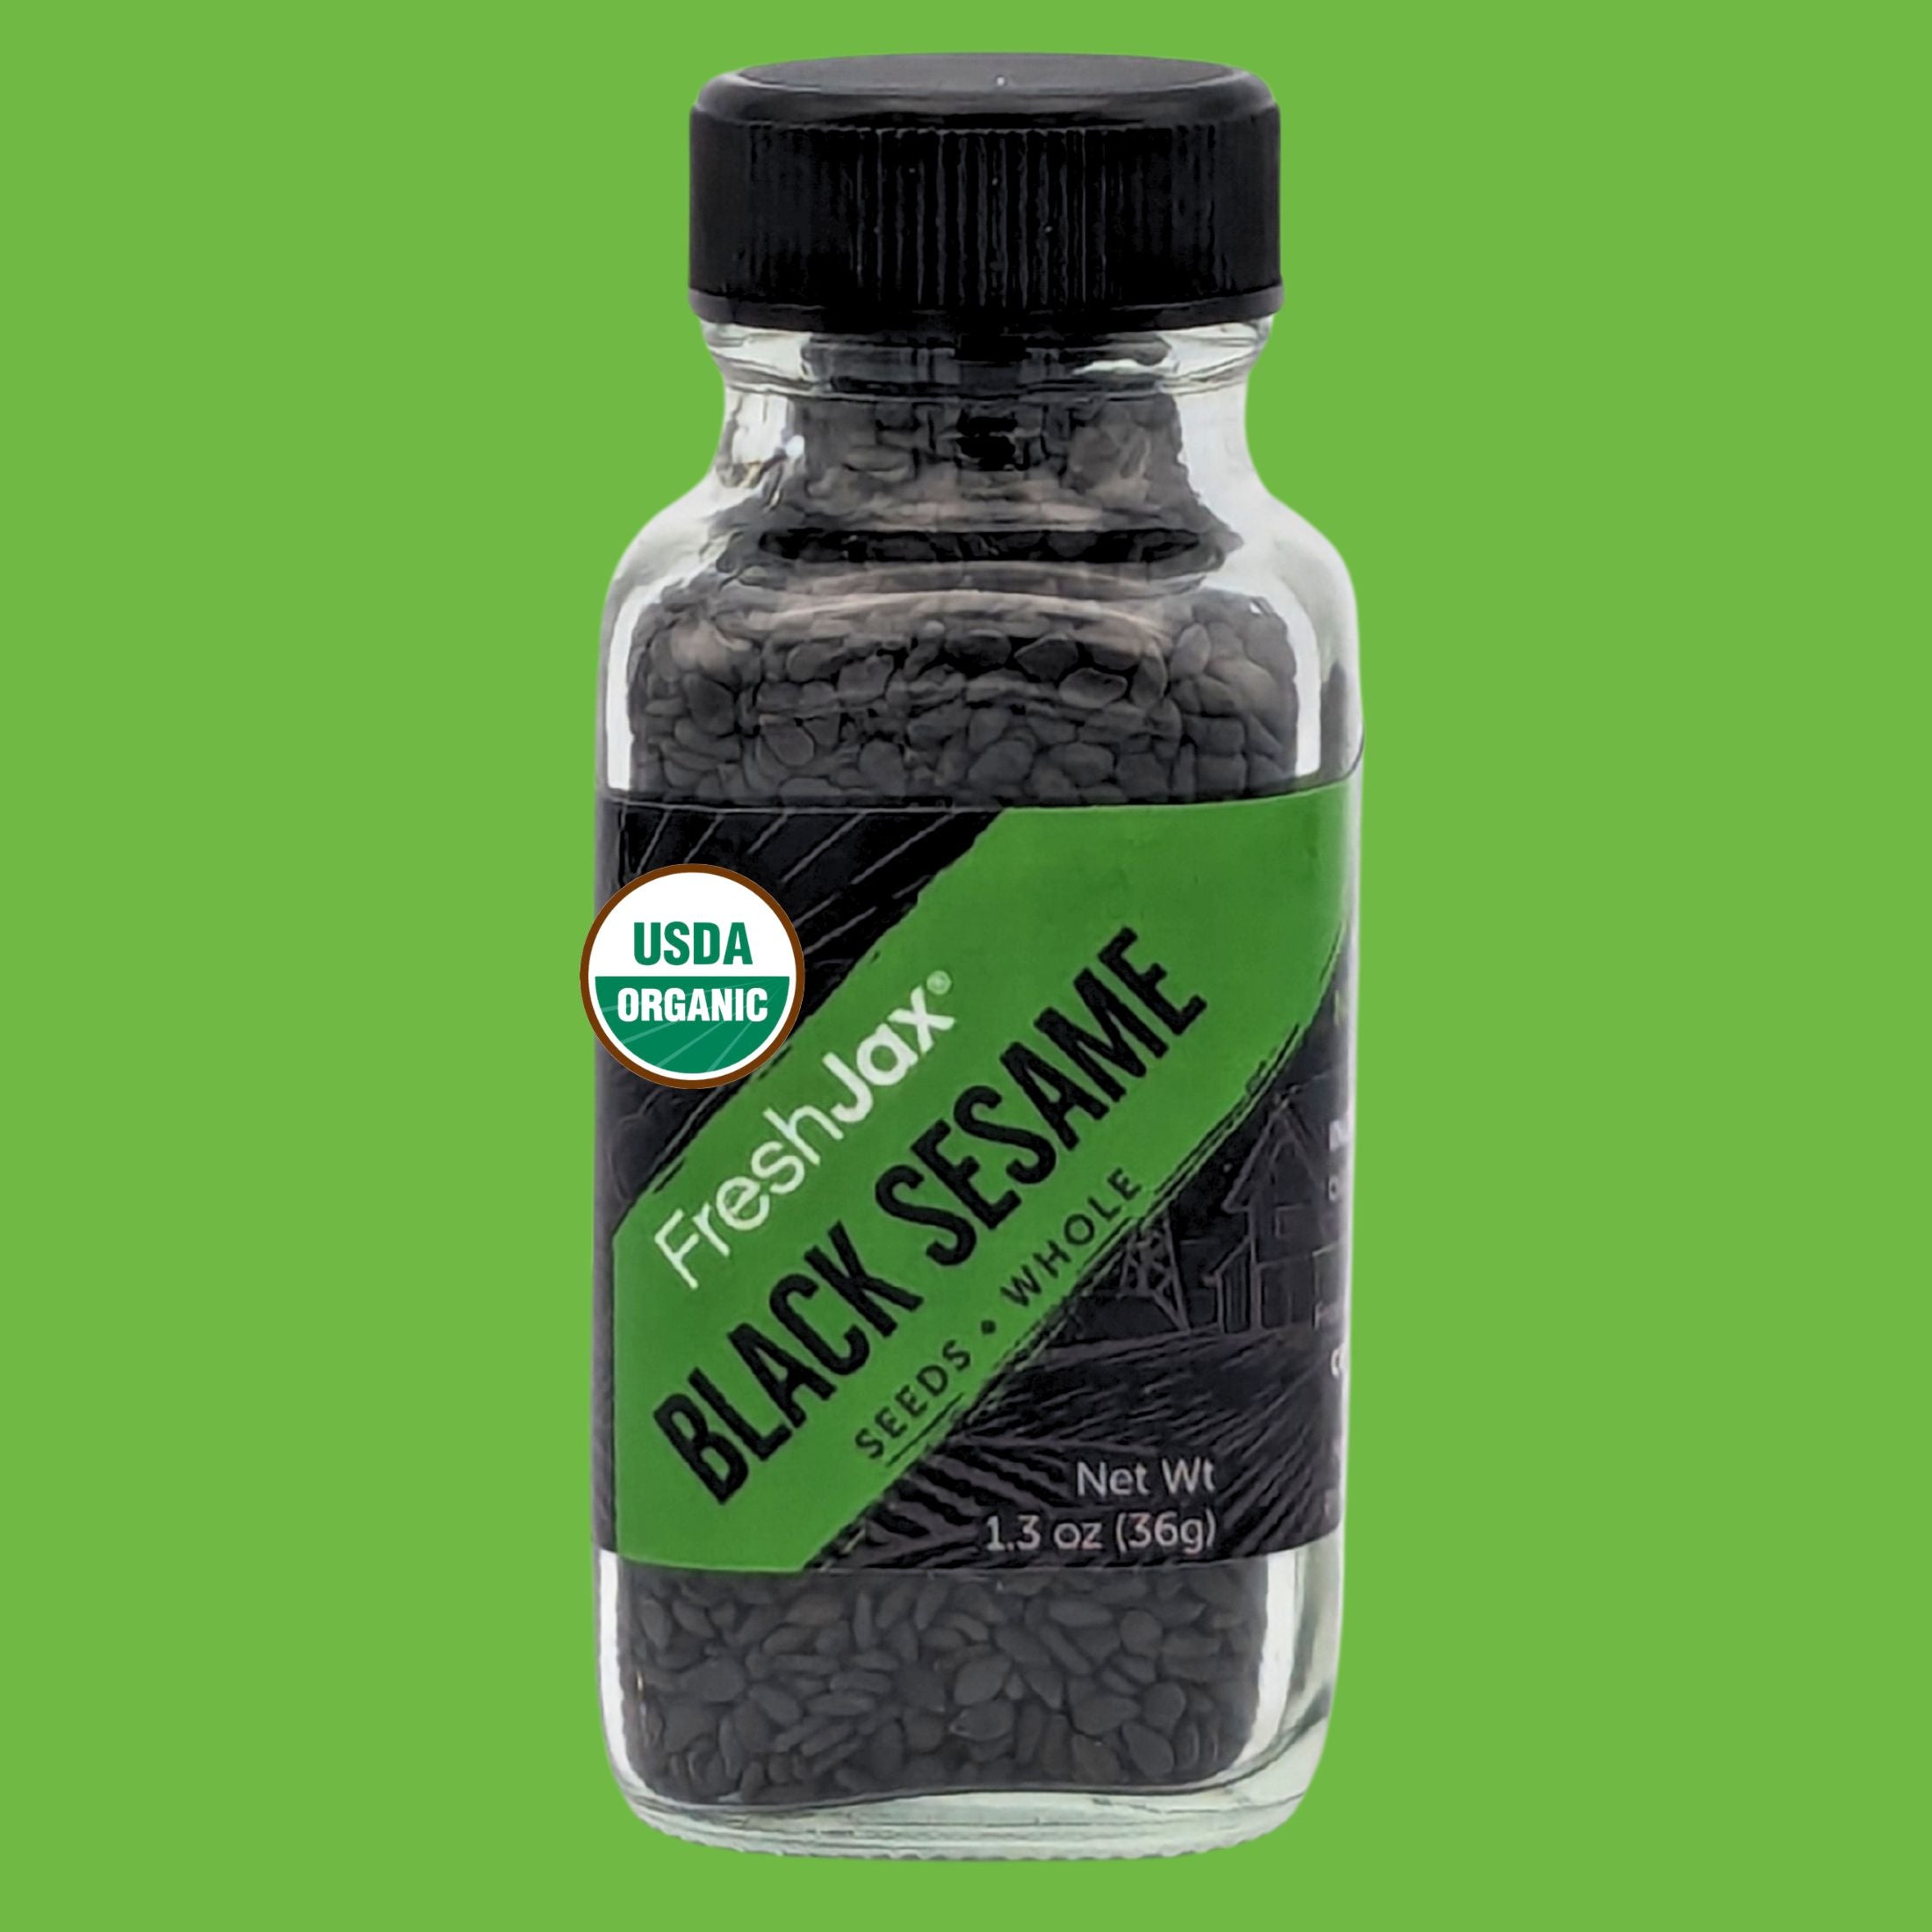 FreshJax Organic Whole Black Sesame Seeds - Sampler Size